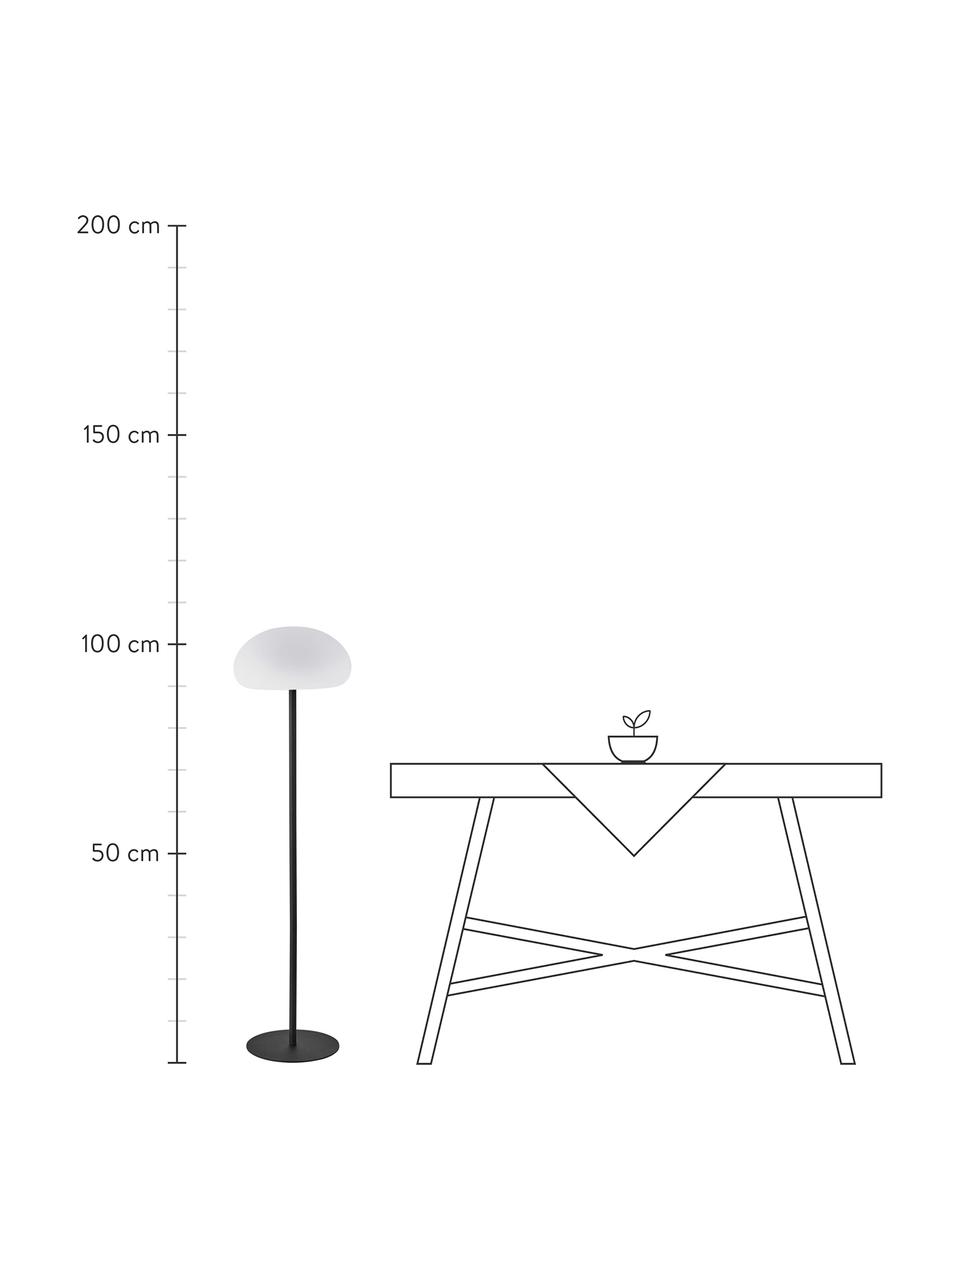 Lampada da terra mobile dimmerabile da esterno Sponge, Paralume: plastica, Bianco, nero, Ø 34 x Alt. 126 cm